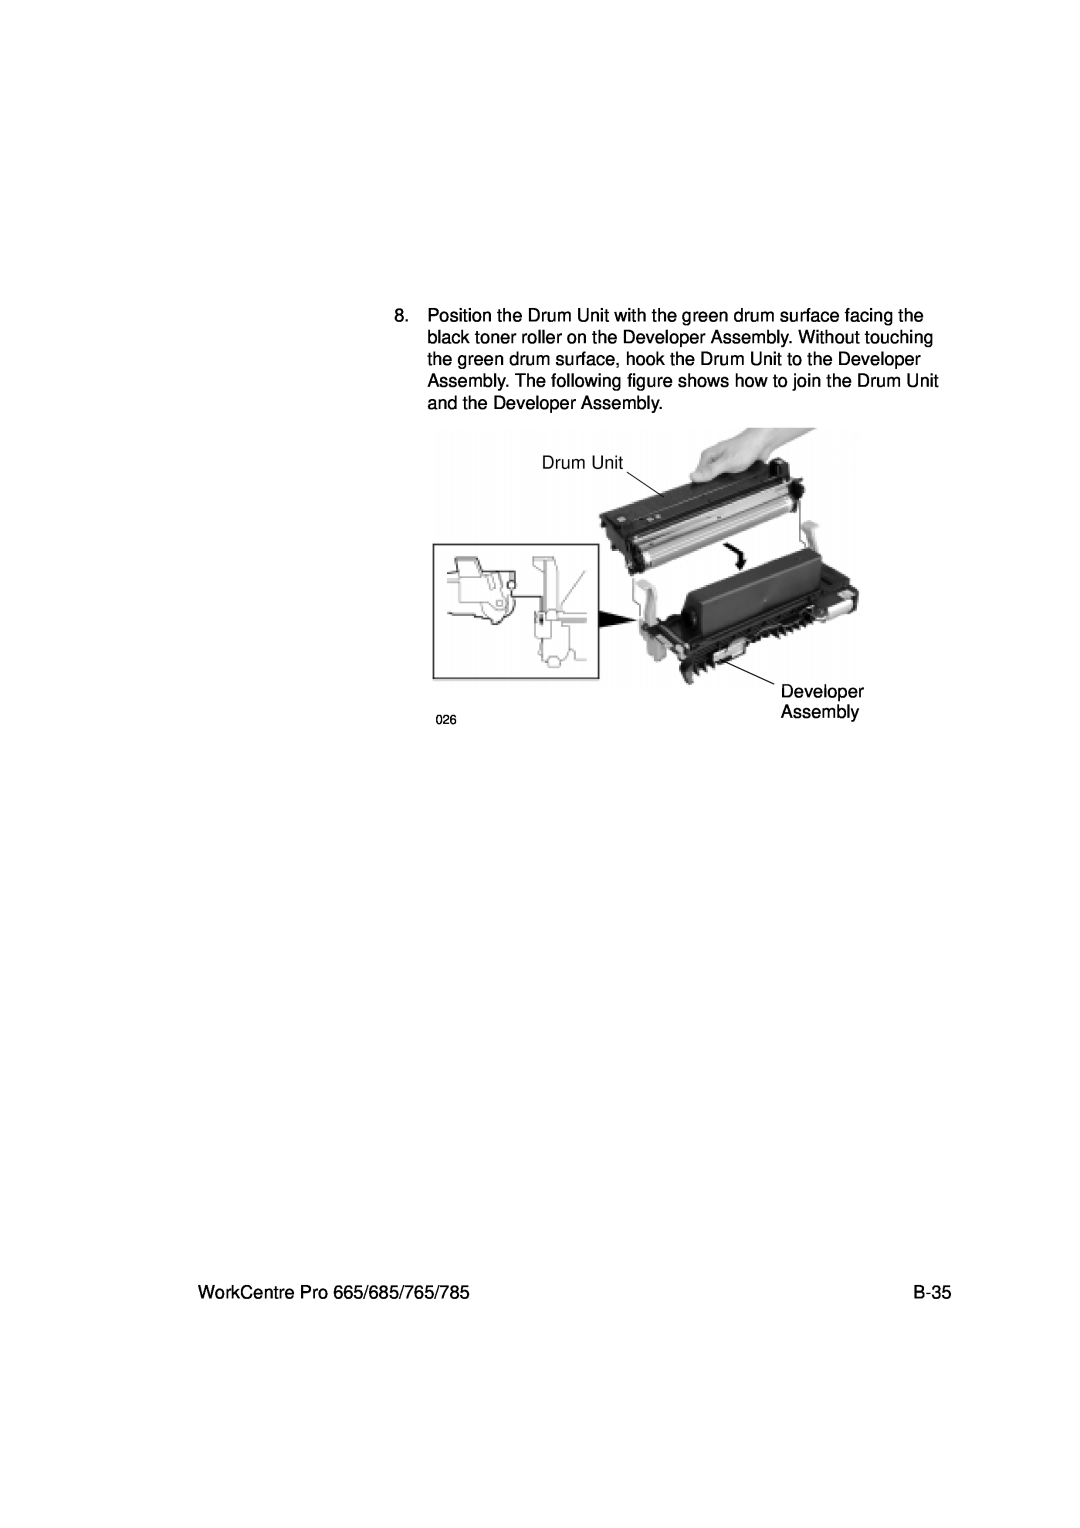 Xerox manual Drum Unit, Developer, Assembly, WorkCentre Pro 665/685/765/785, B-35 